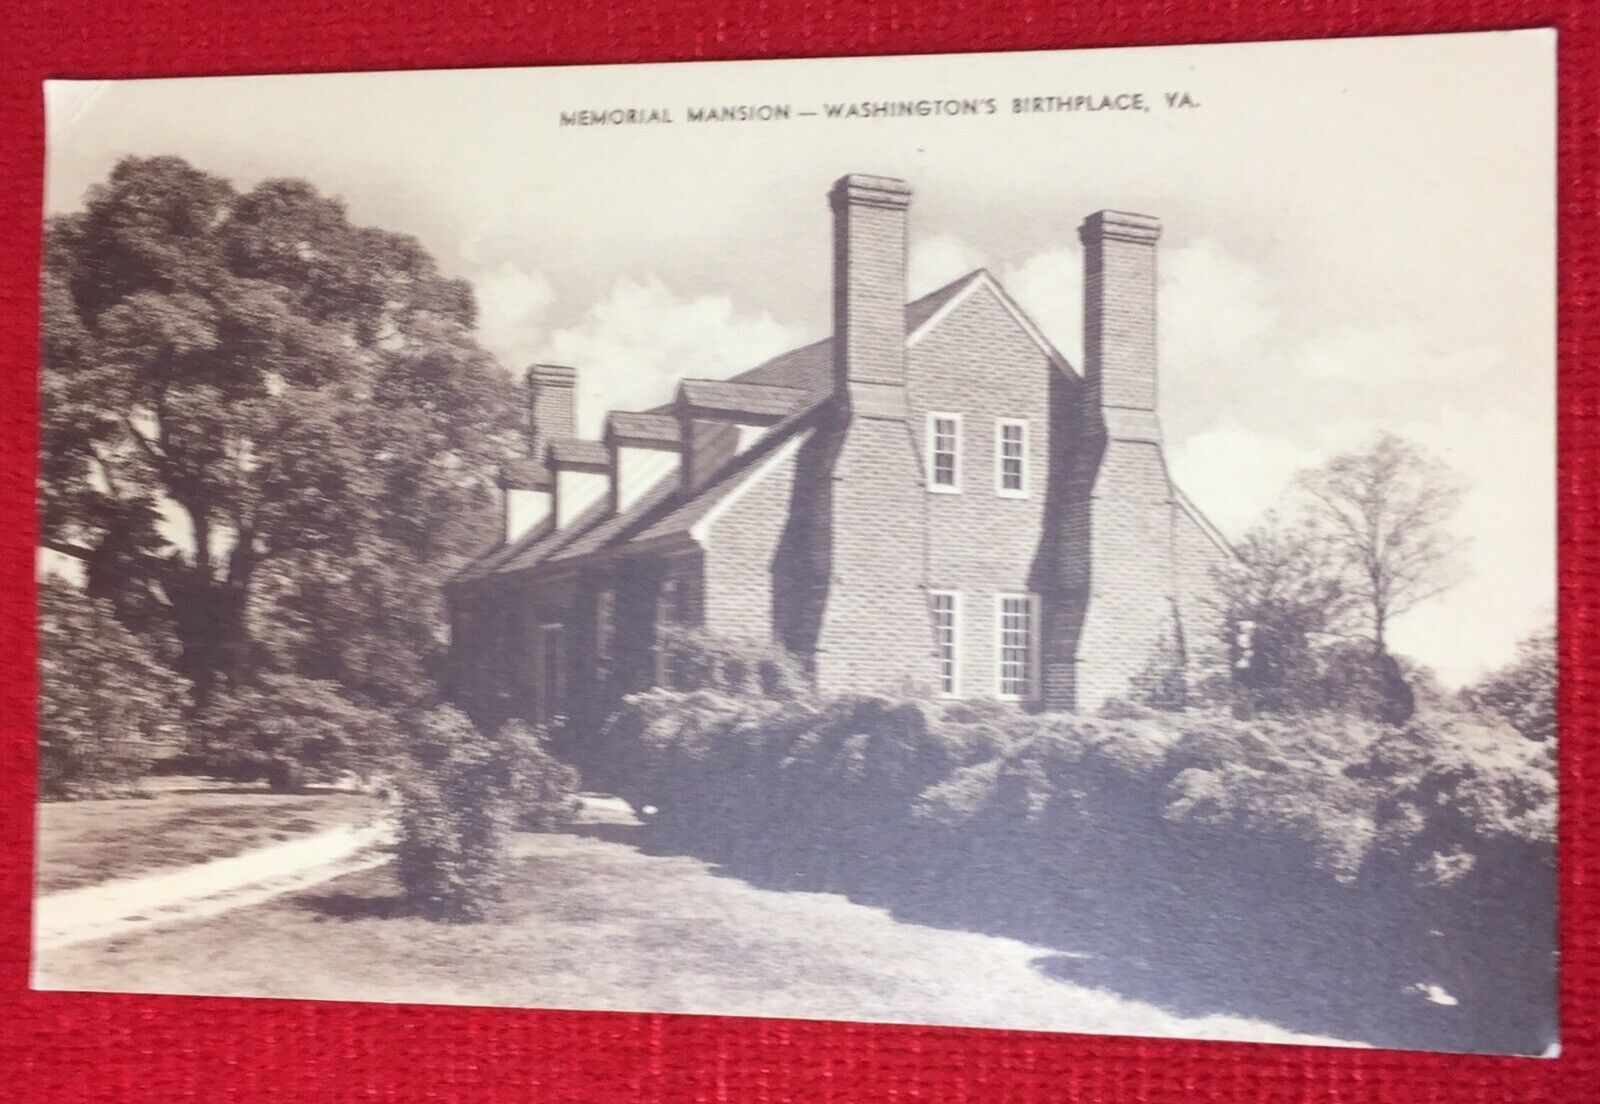 Artvue Postcard Co. Memorial Mansion - Washington\'s Birthplace, Va. Postcard